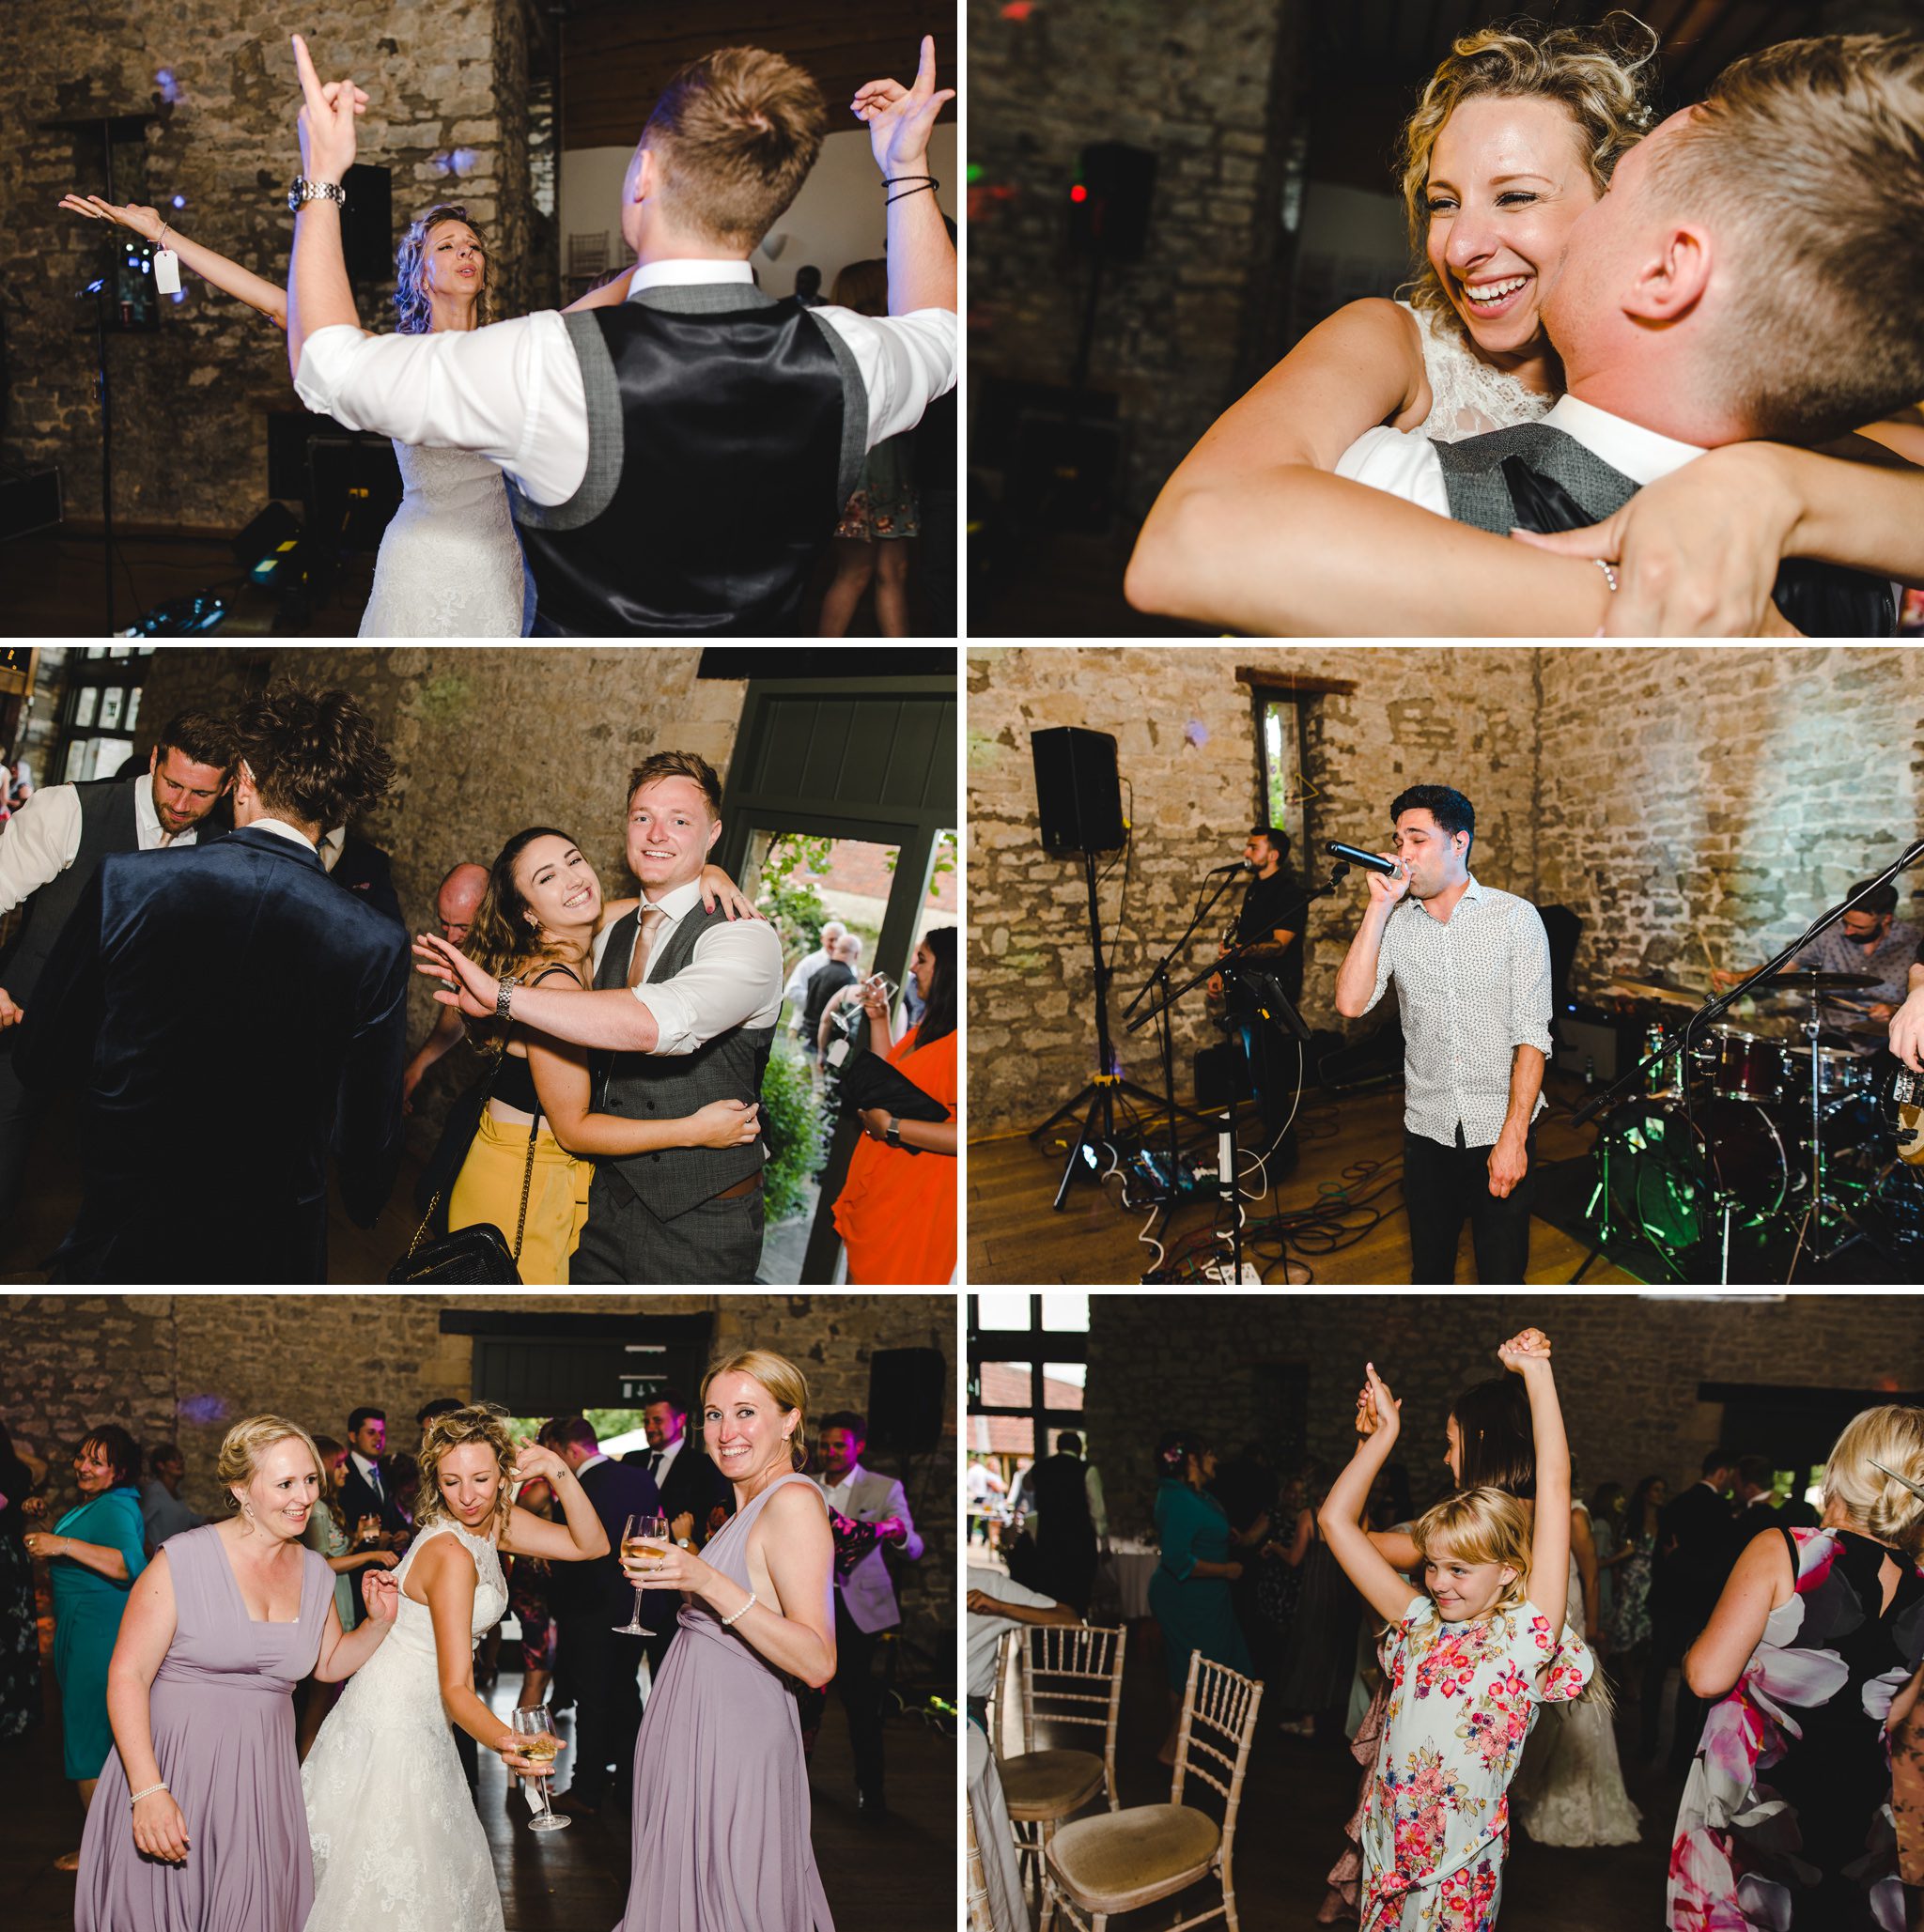 Wedding guests dancing at Priston Mill venue